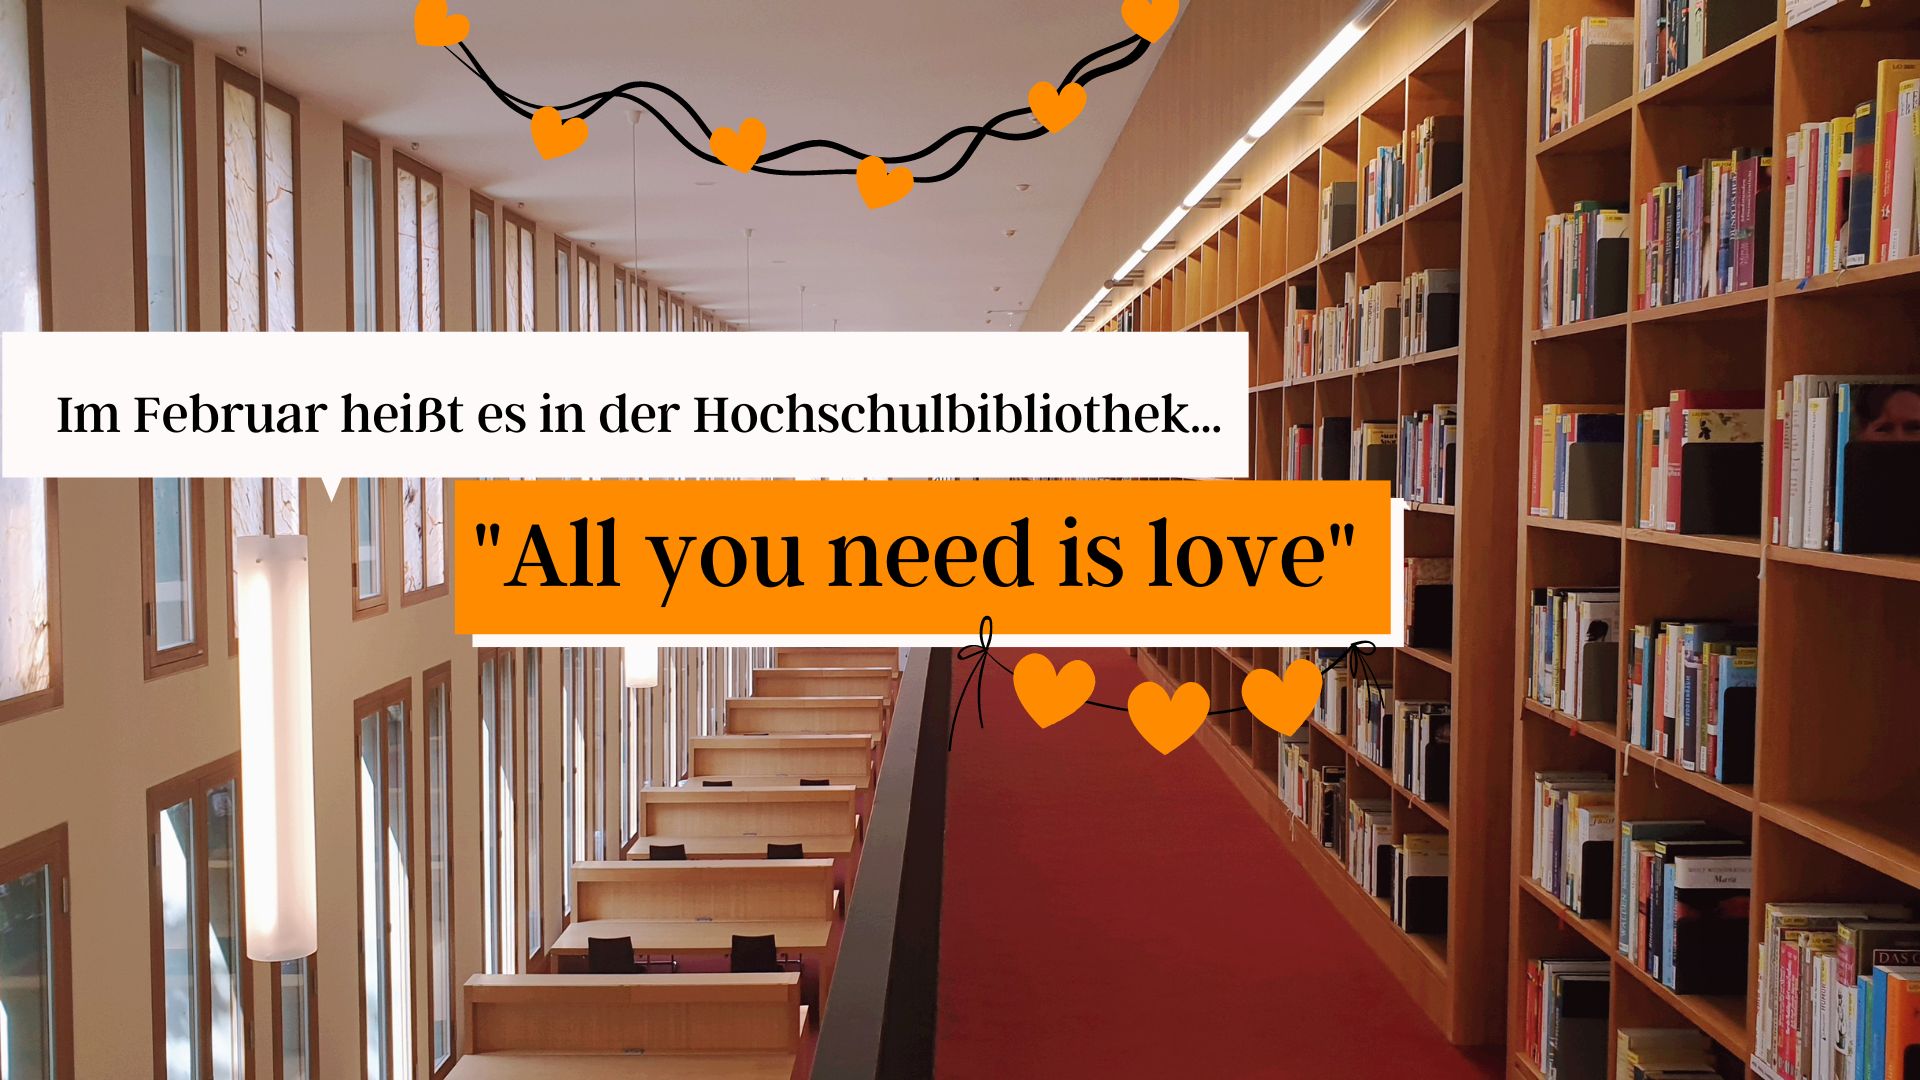 Im Februar in der Hochschulbibliothek: All you need is love.